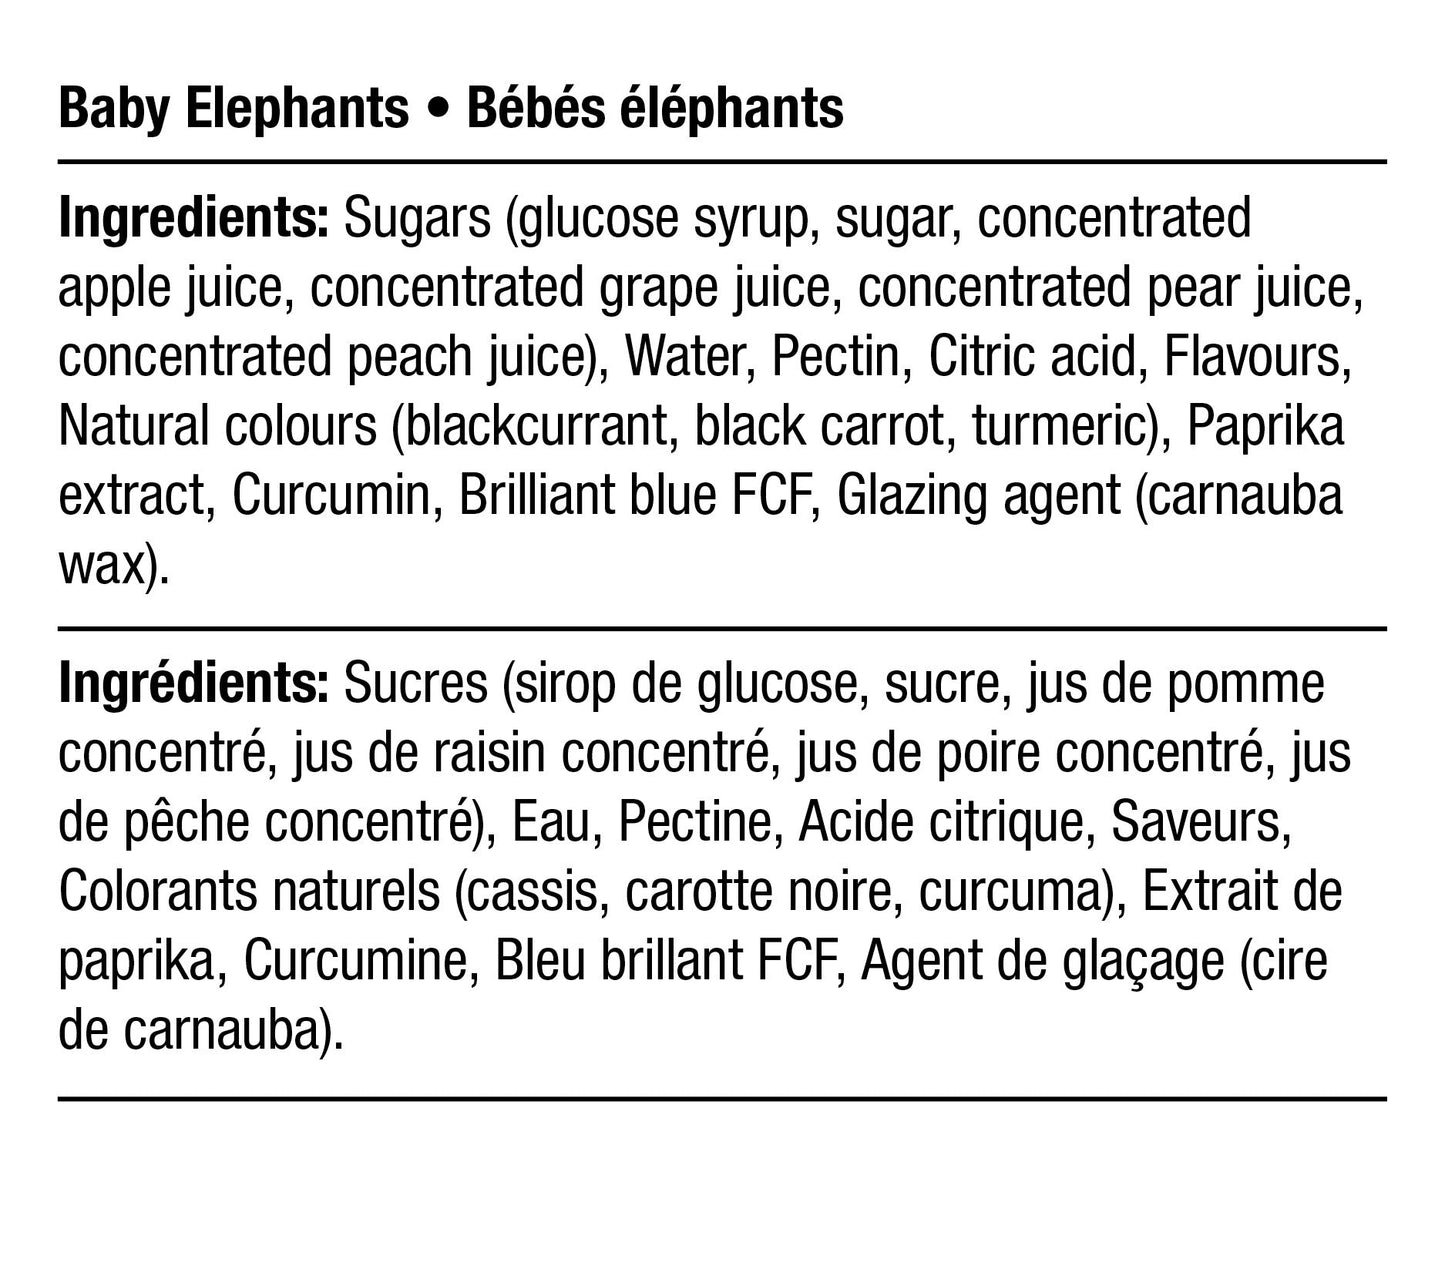 Squish | Candy: Elephants Gummies (120g)